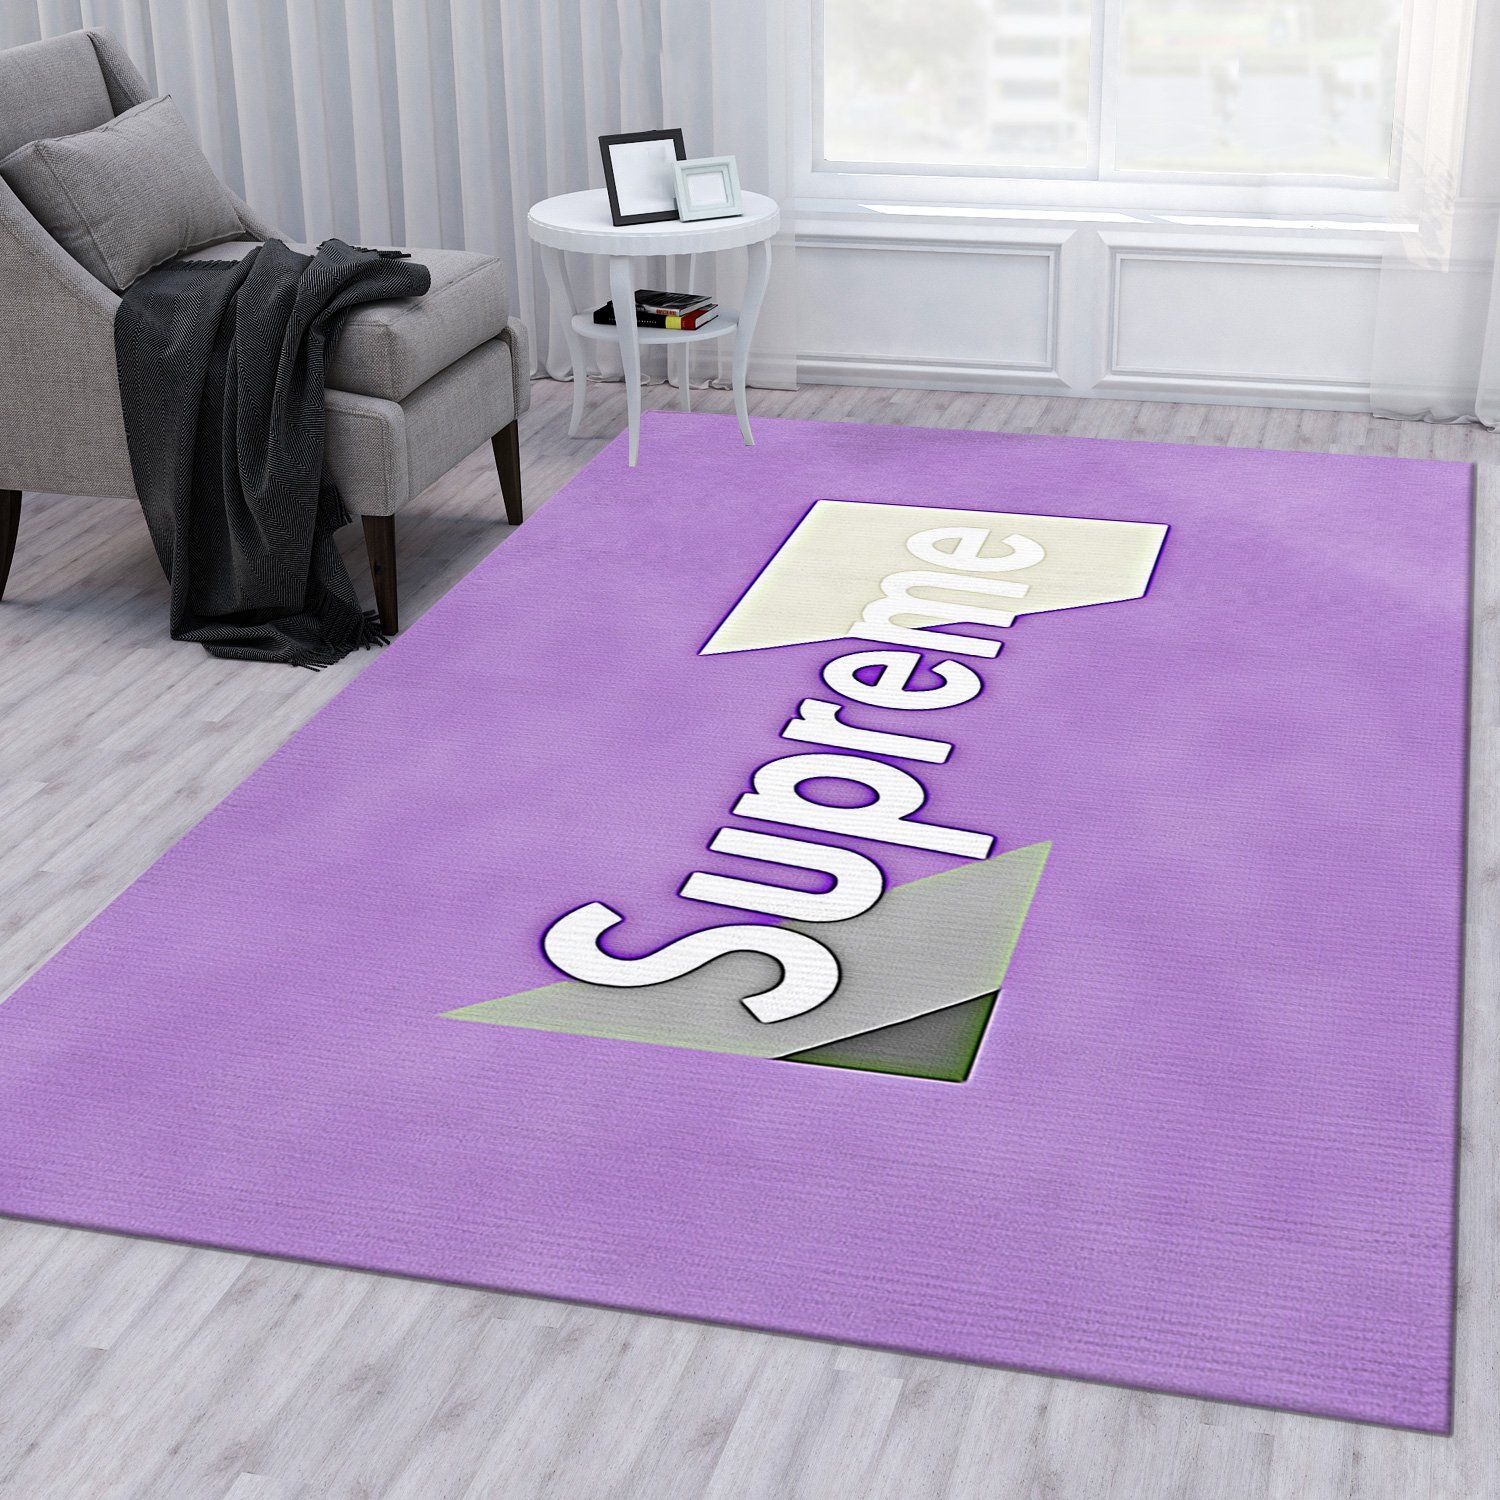 Supreme V Area Bed Christmas Luxury Fashion Brand Rug Home Decor Area Carpet Door Mat